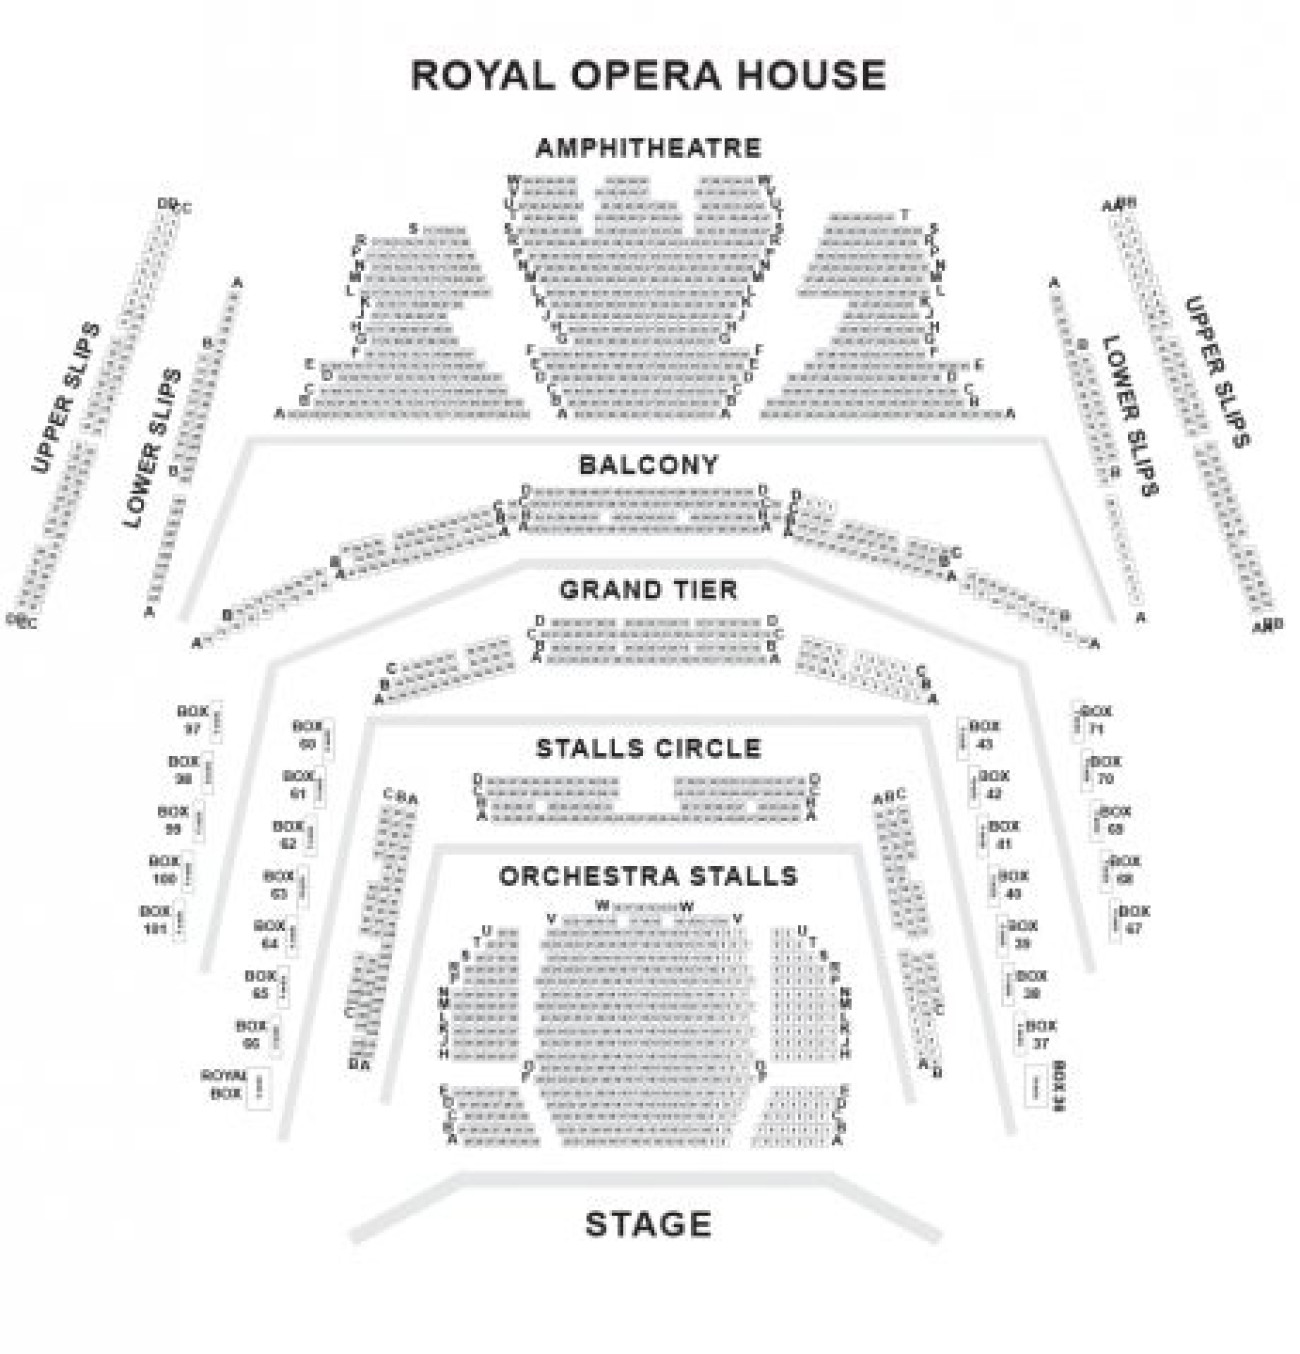 Royal Opera House Platsöversikt